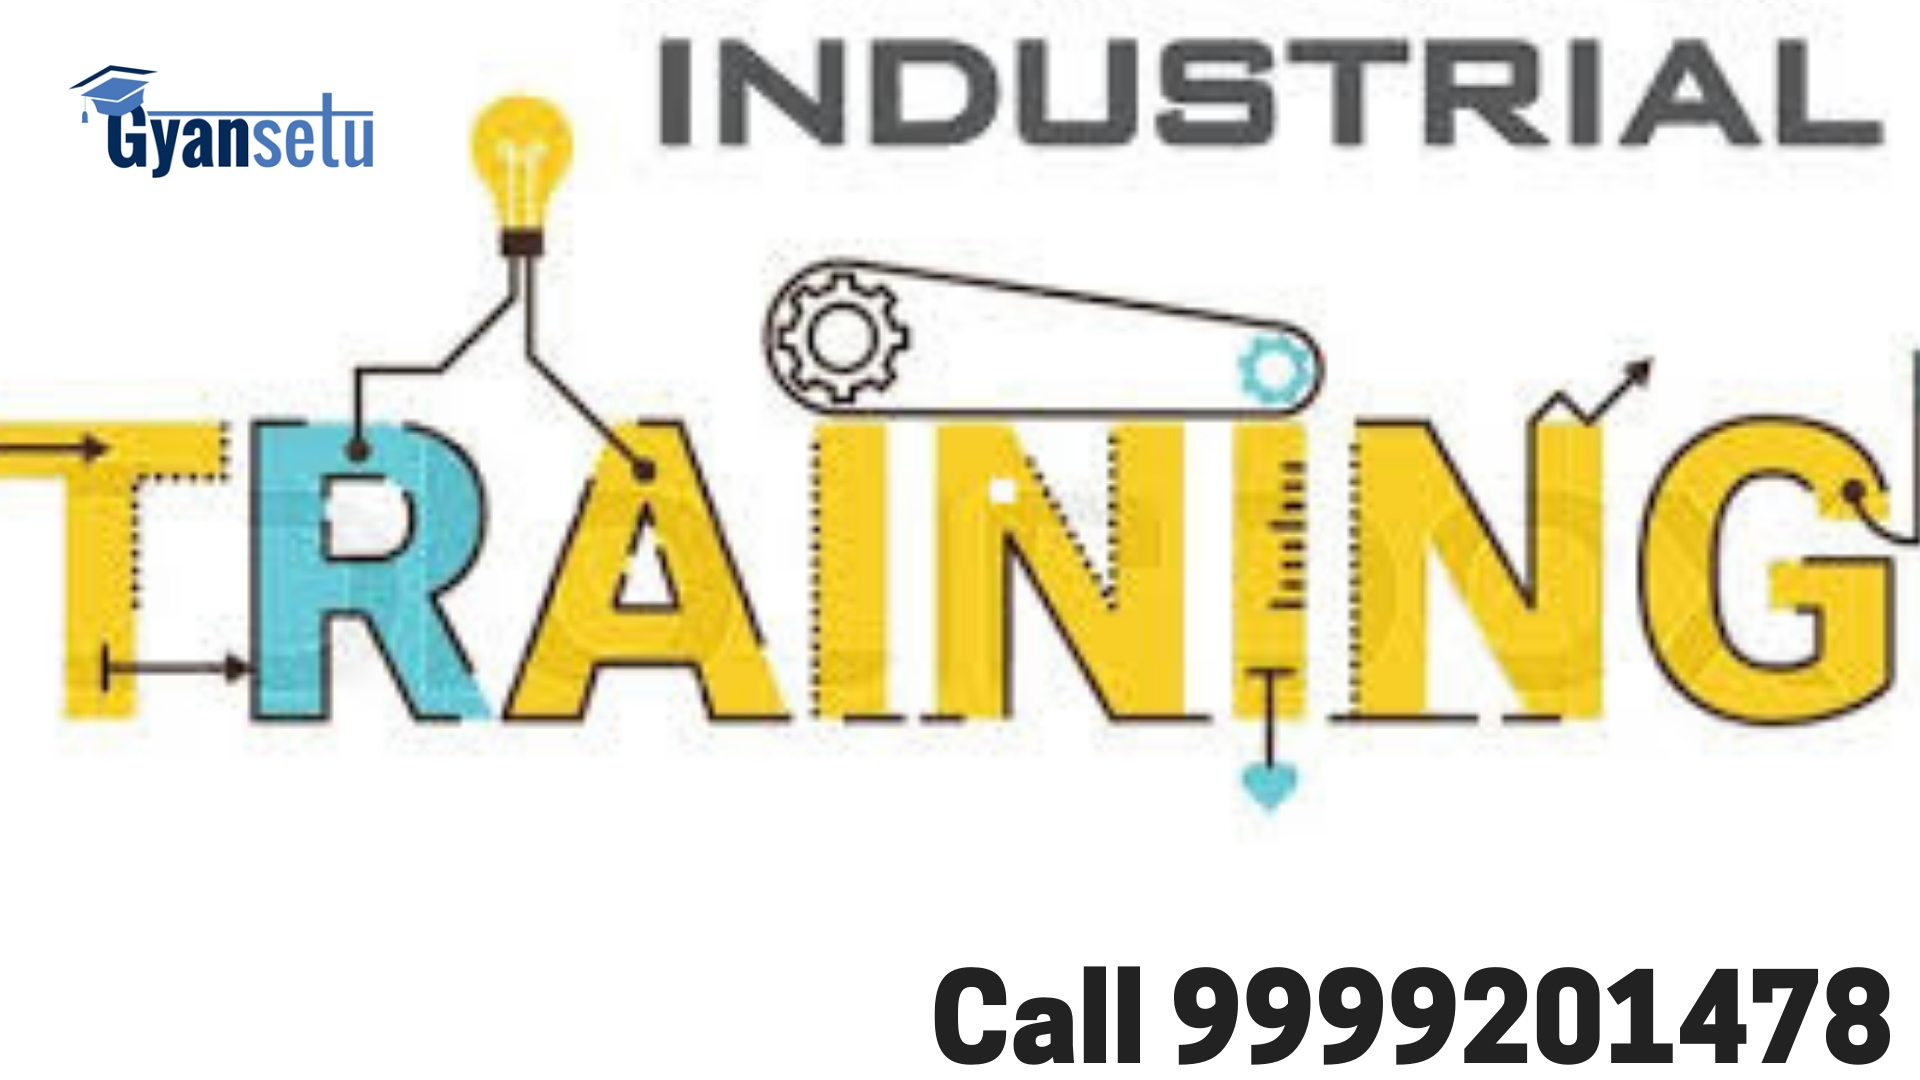 Industrial Training in Gurgaon, Gurgaon, Haryana, India